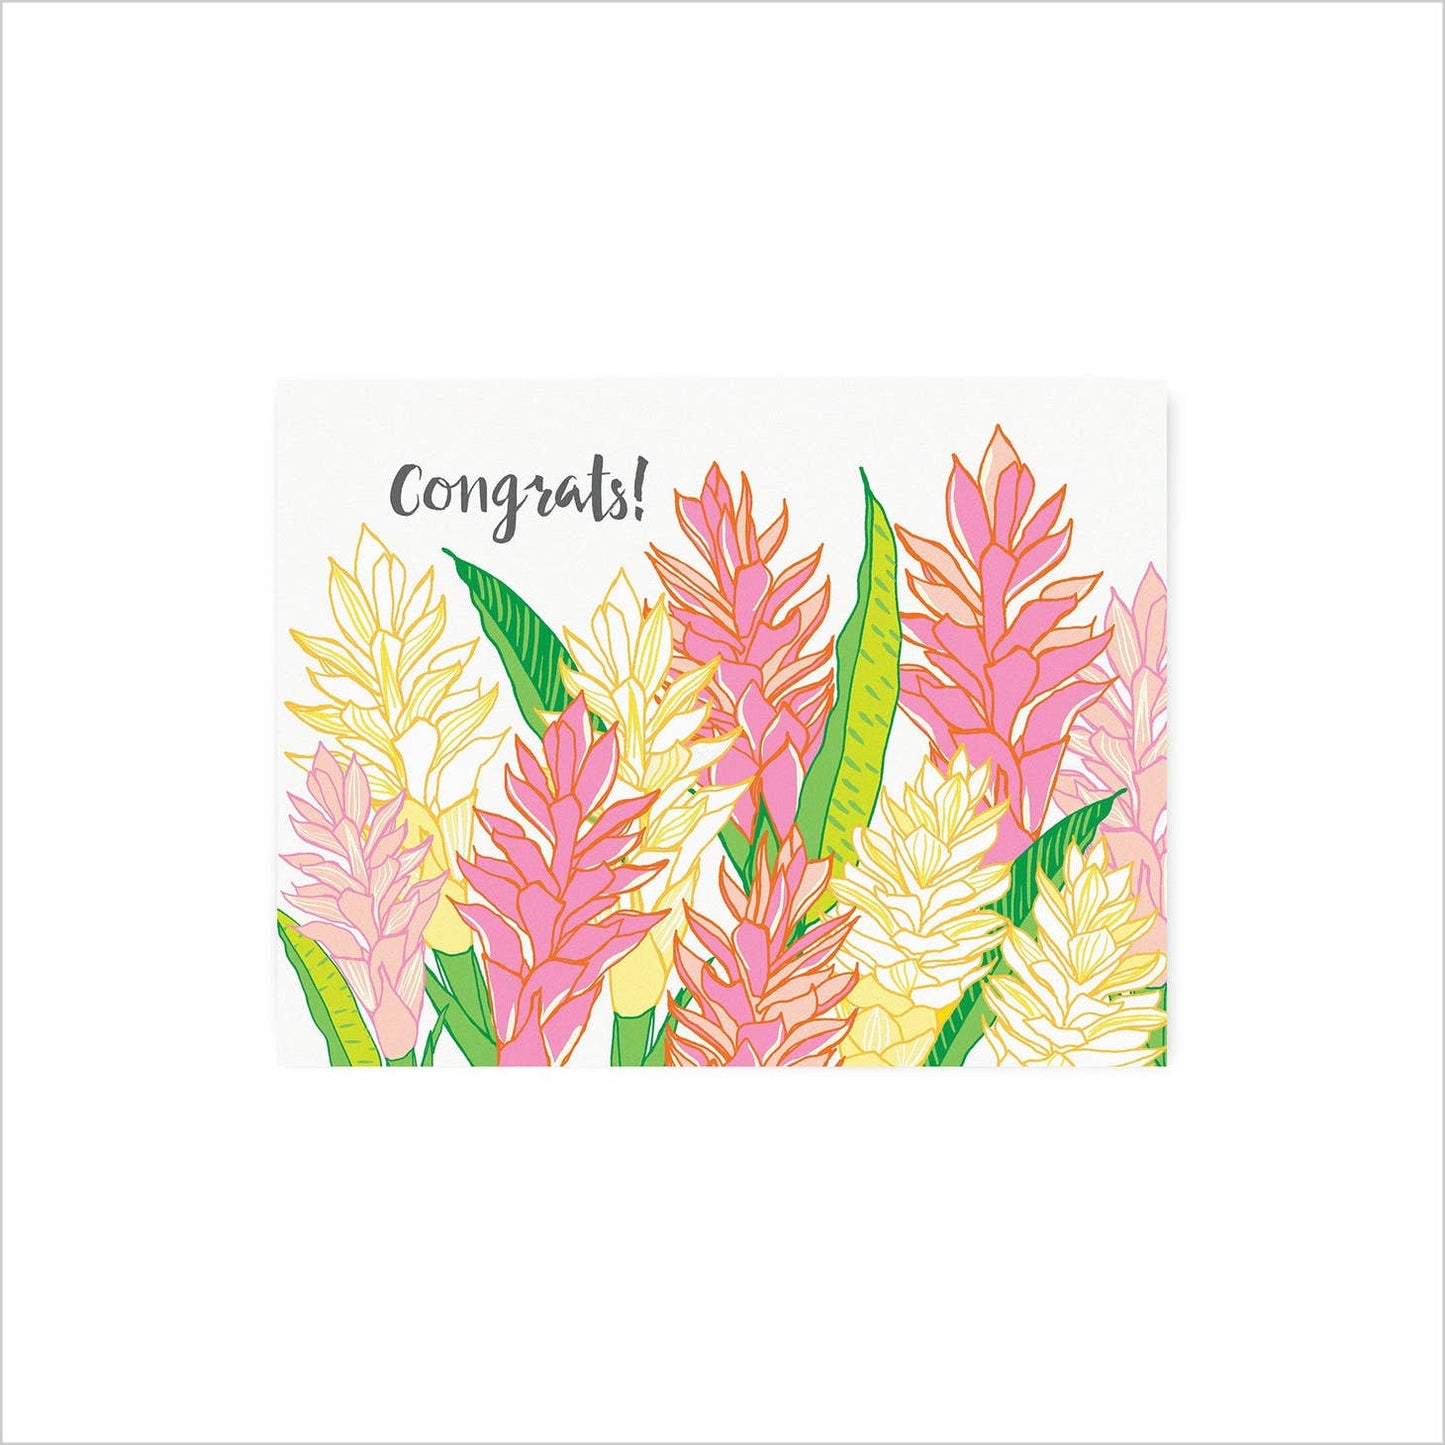 Congrats! Ginger Greeting Card